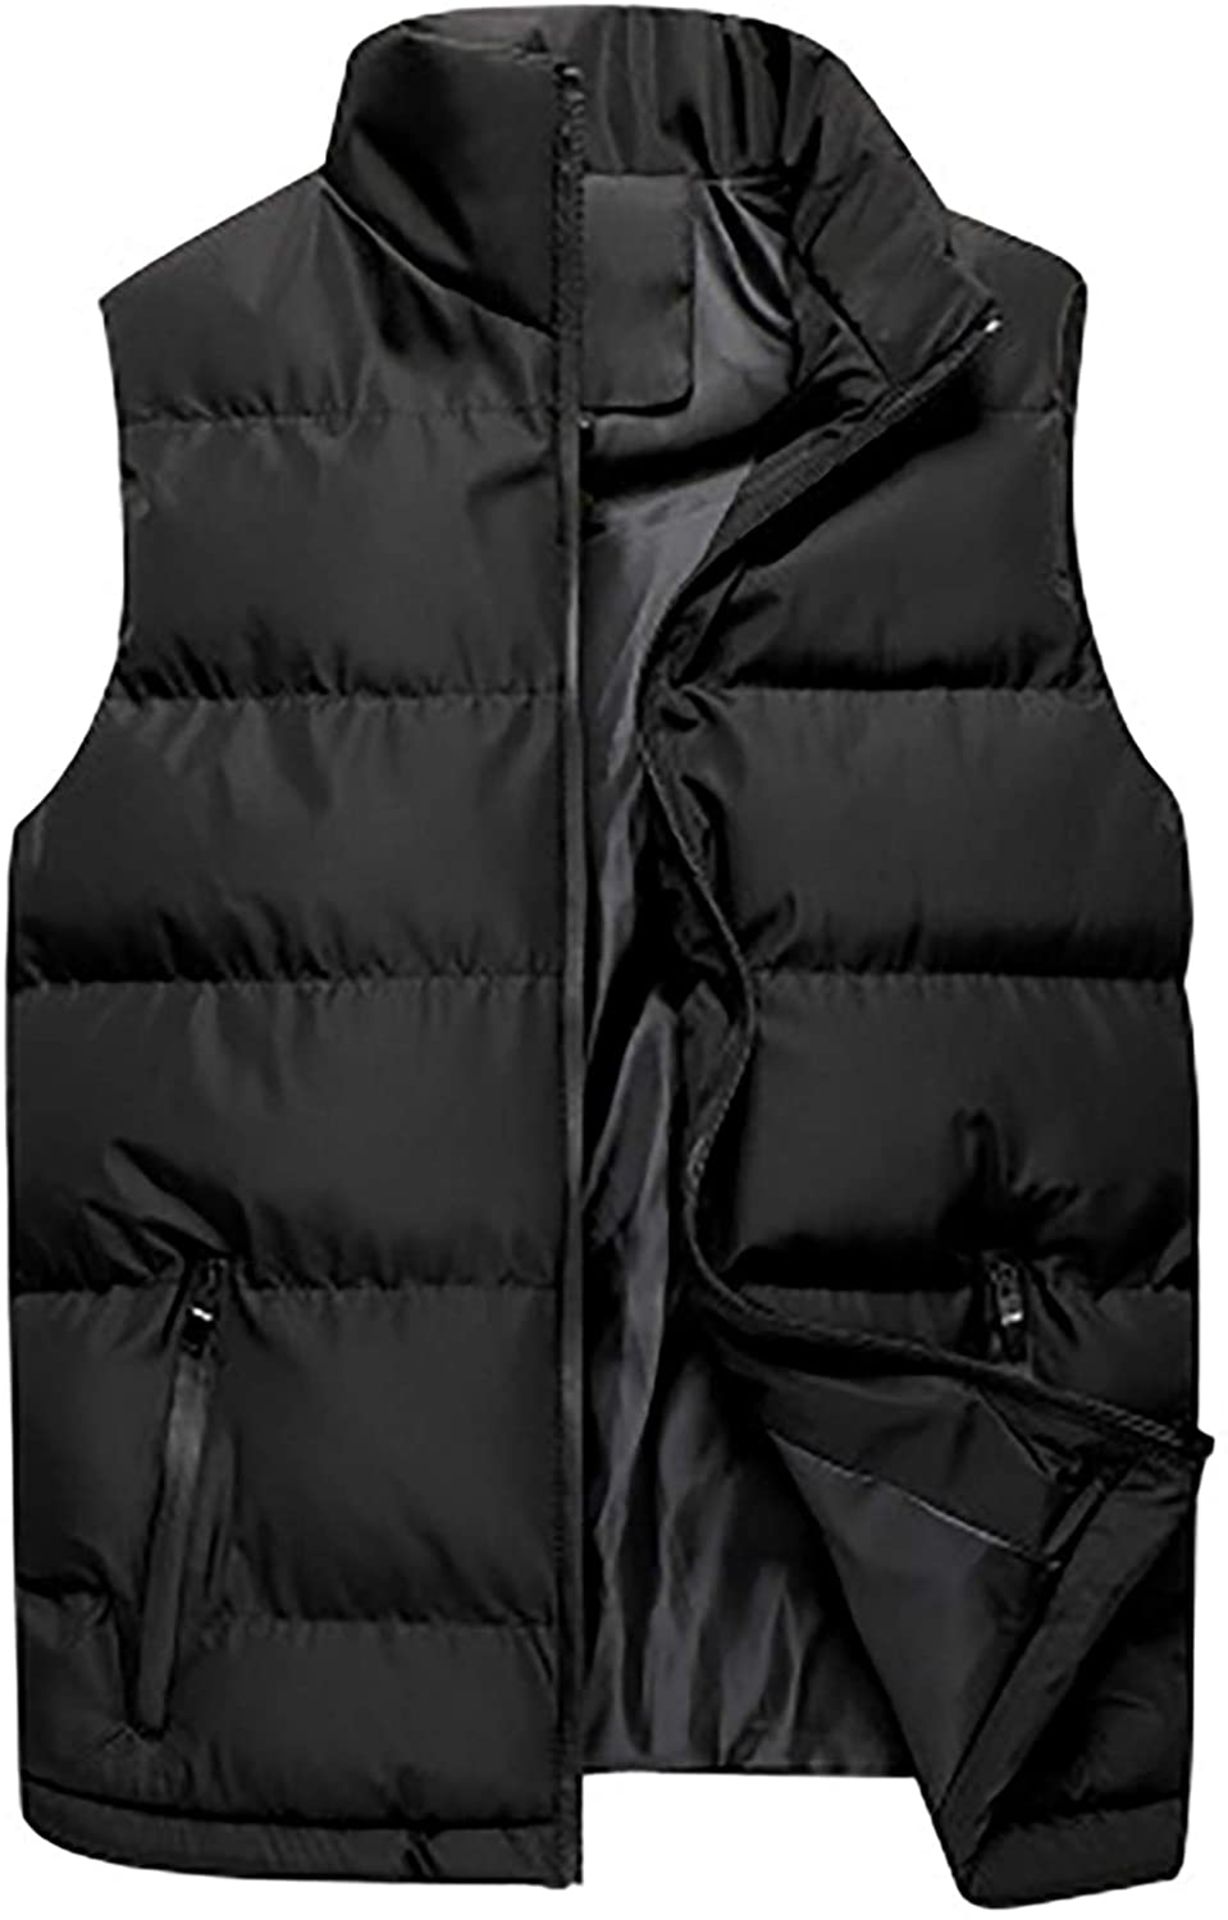 Men's Down Vest - Winter Warm Waterproof Vest Jacket, Large RRP £31.99